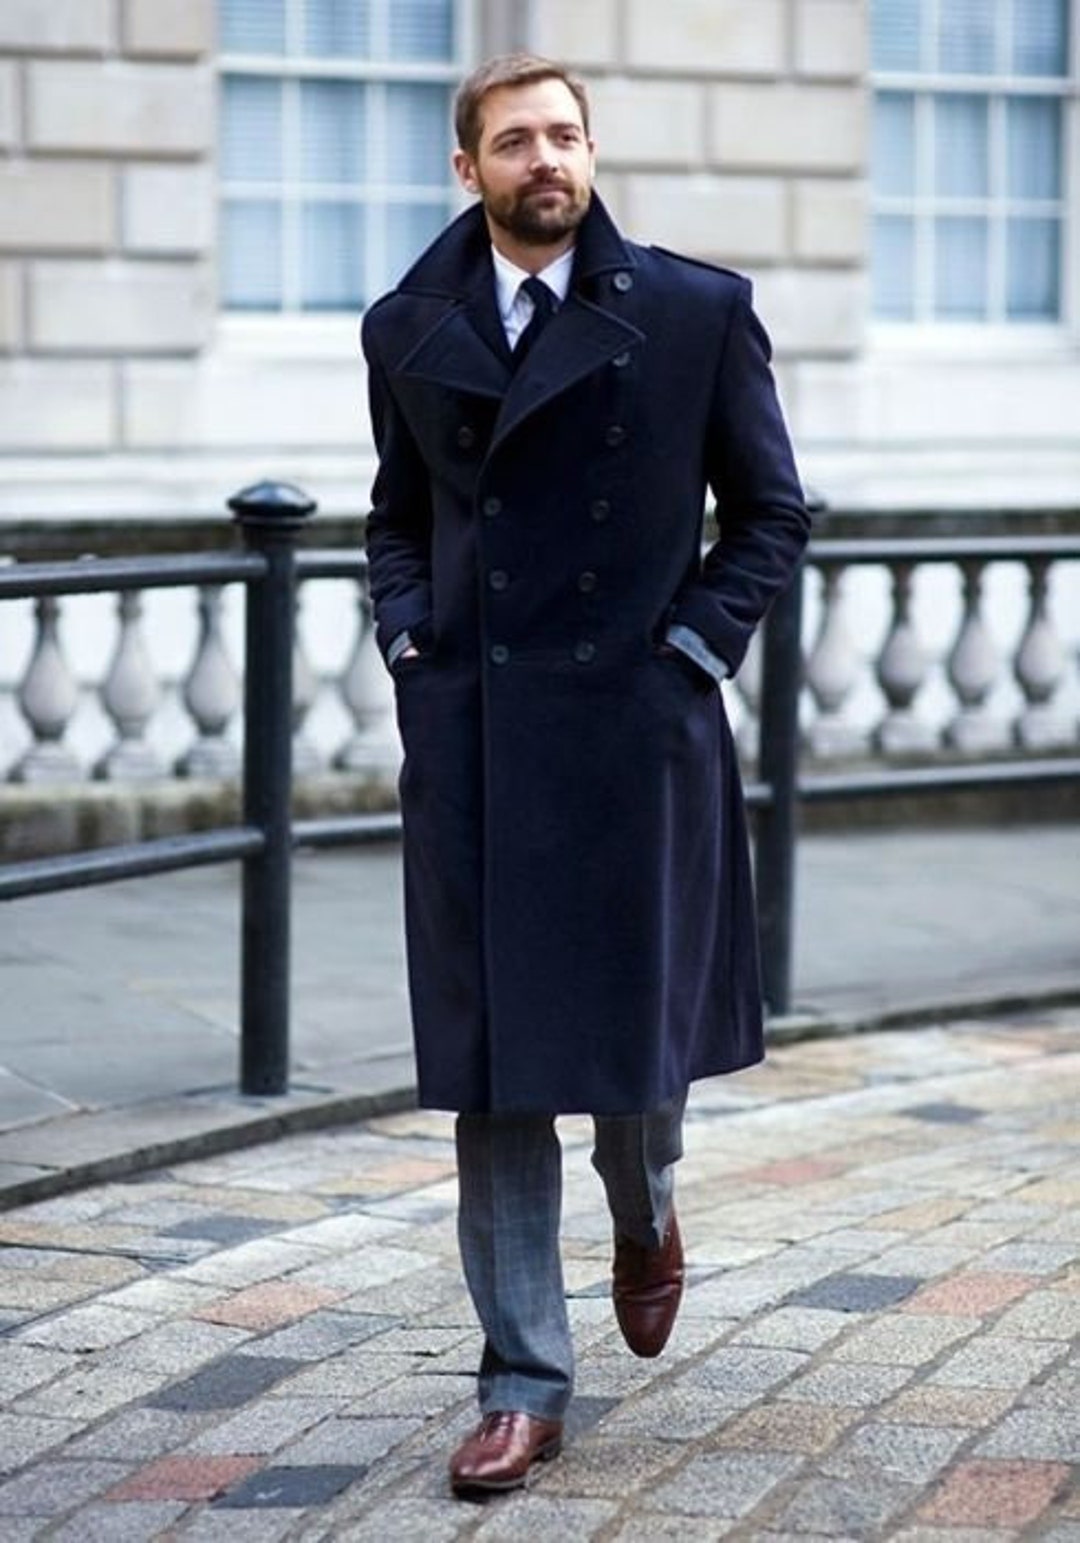 Темное пальто мужское. Классическое пальто мужское. Стильное мужское пальто. Пальто черное мужское классическое. Пальто мужское длинное классическое.